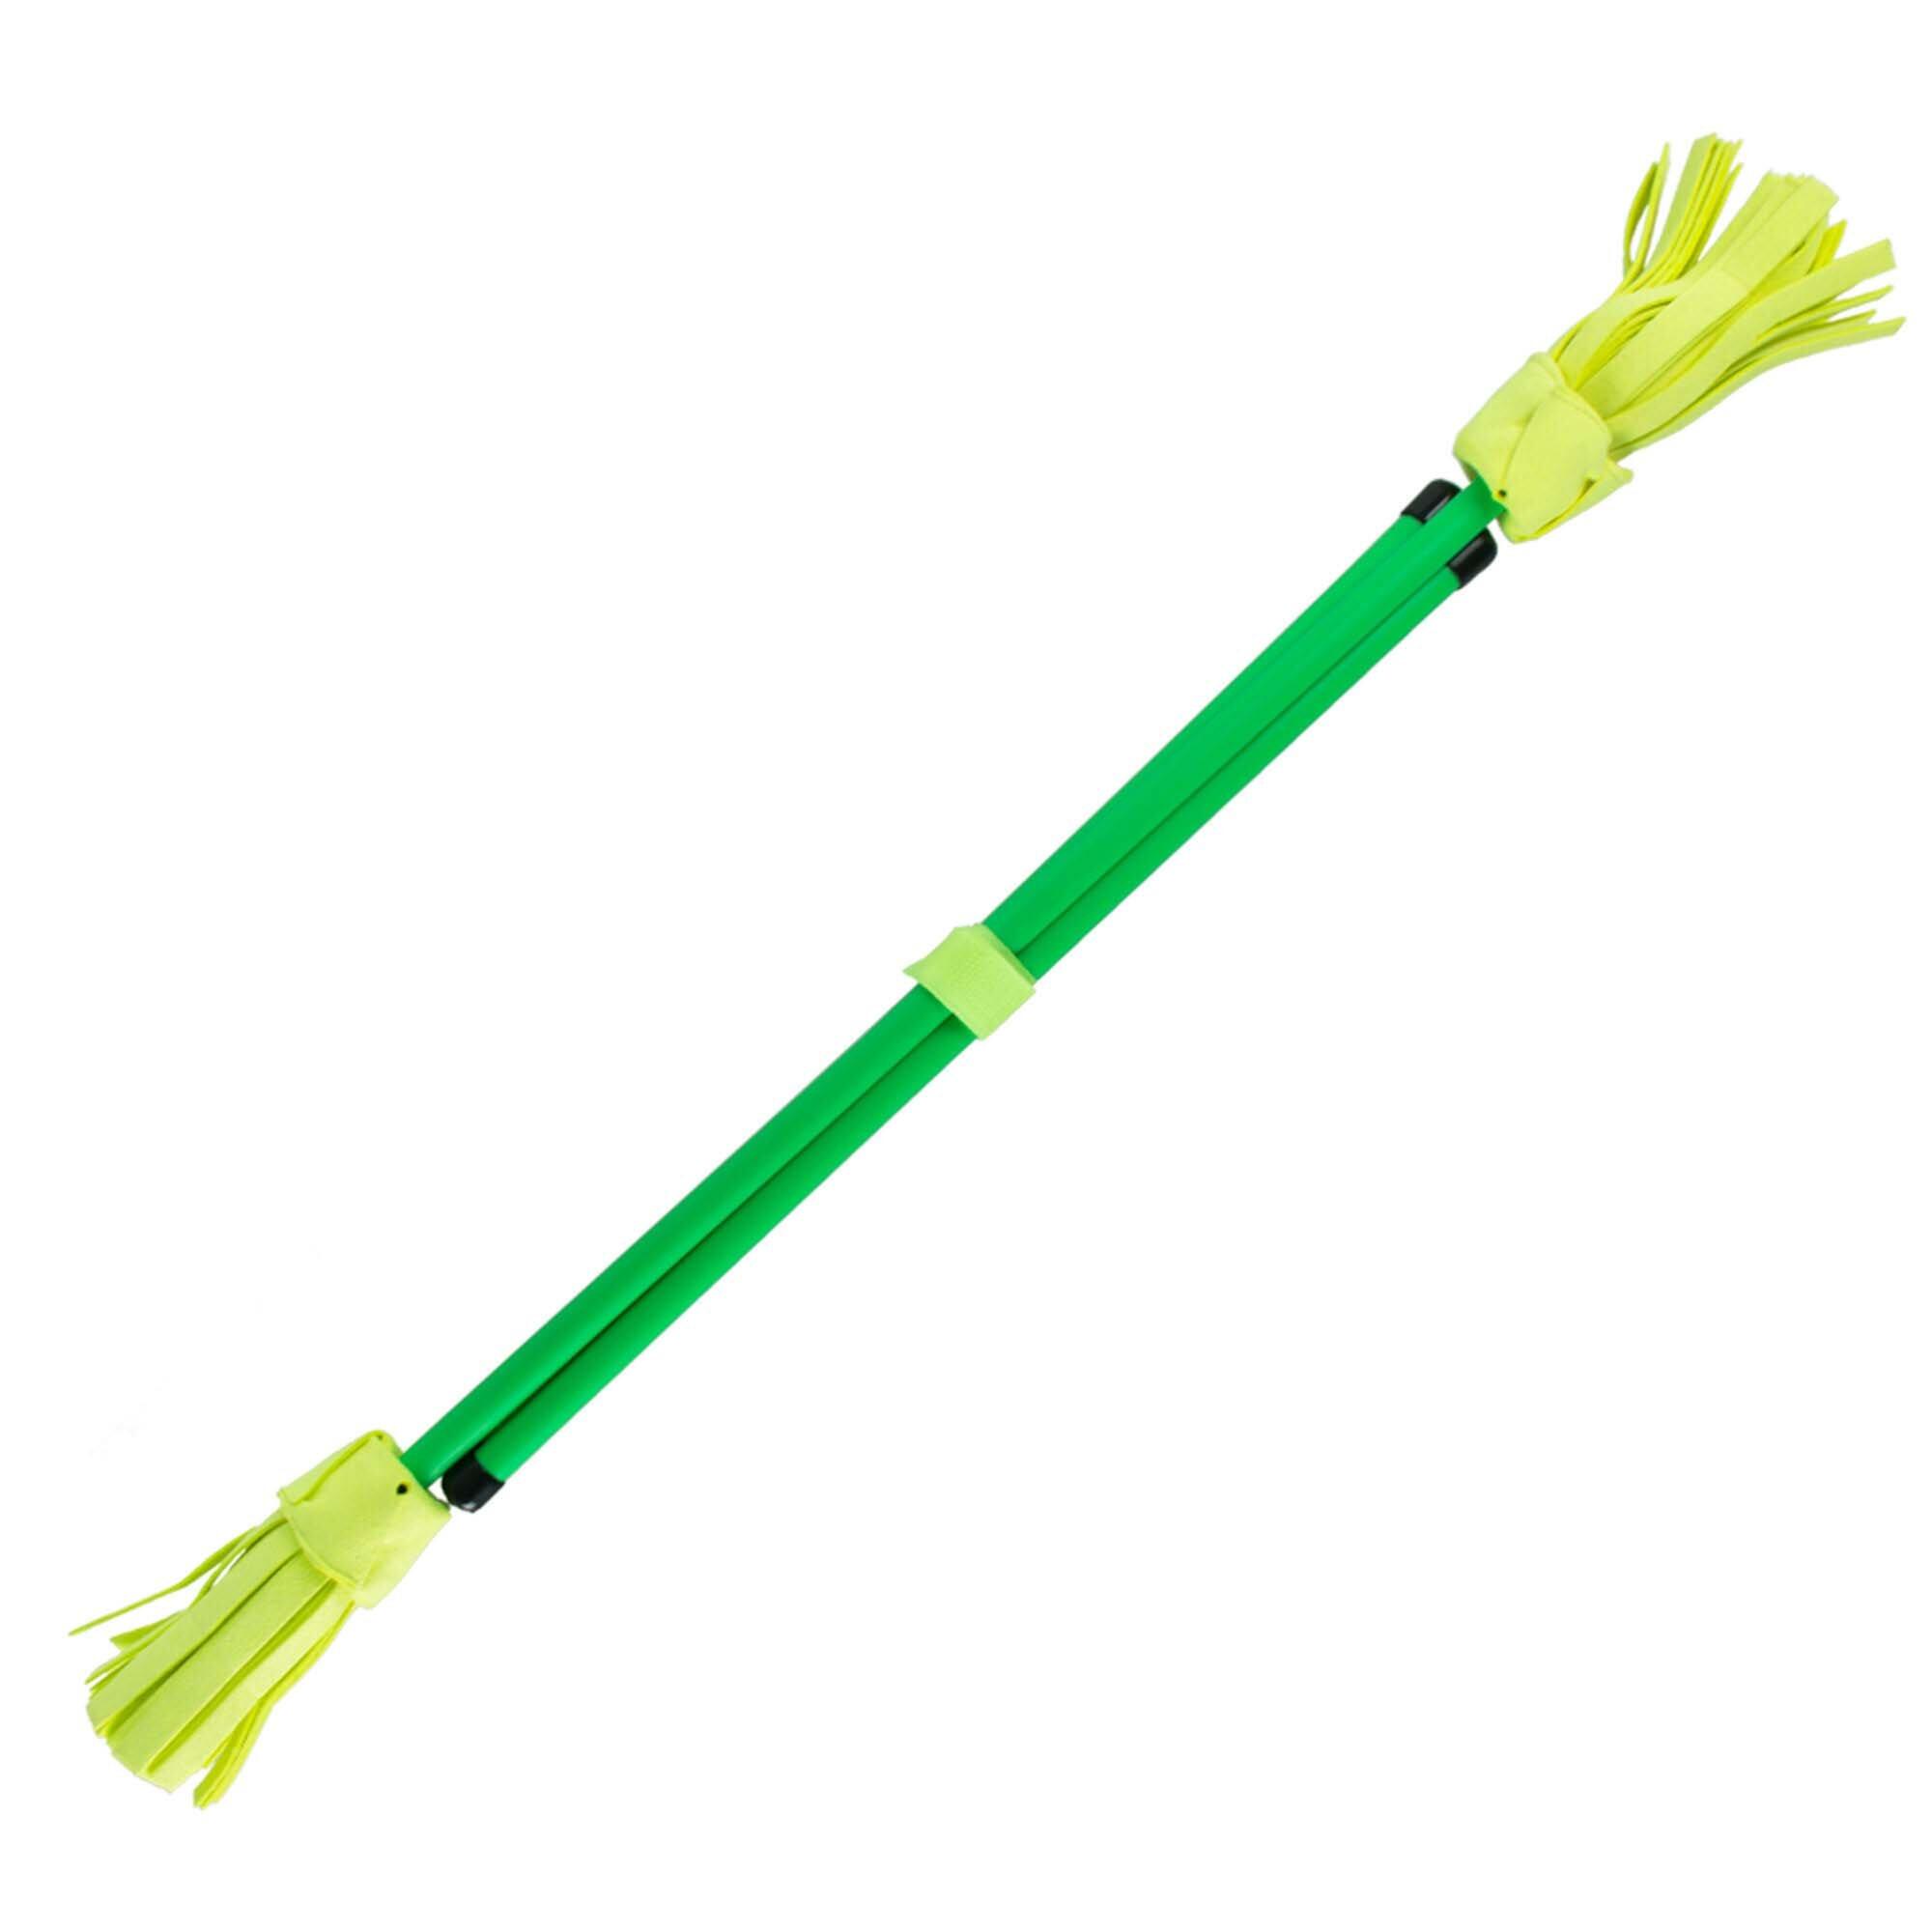 FIRETOYS Neo Fluoro Flower Stick and Hand Sticks-Green with Yellow Tassels